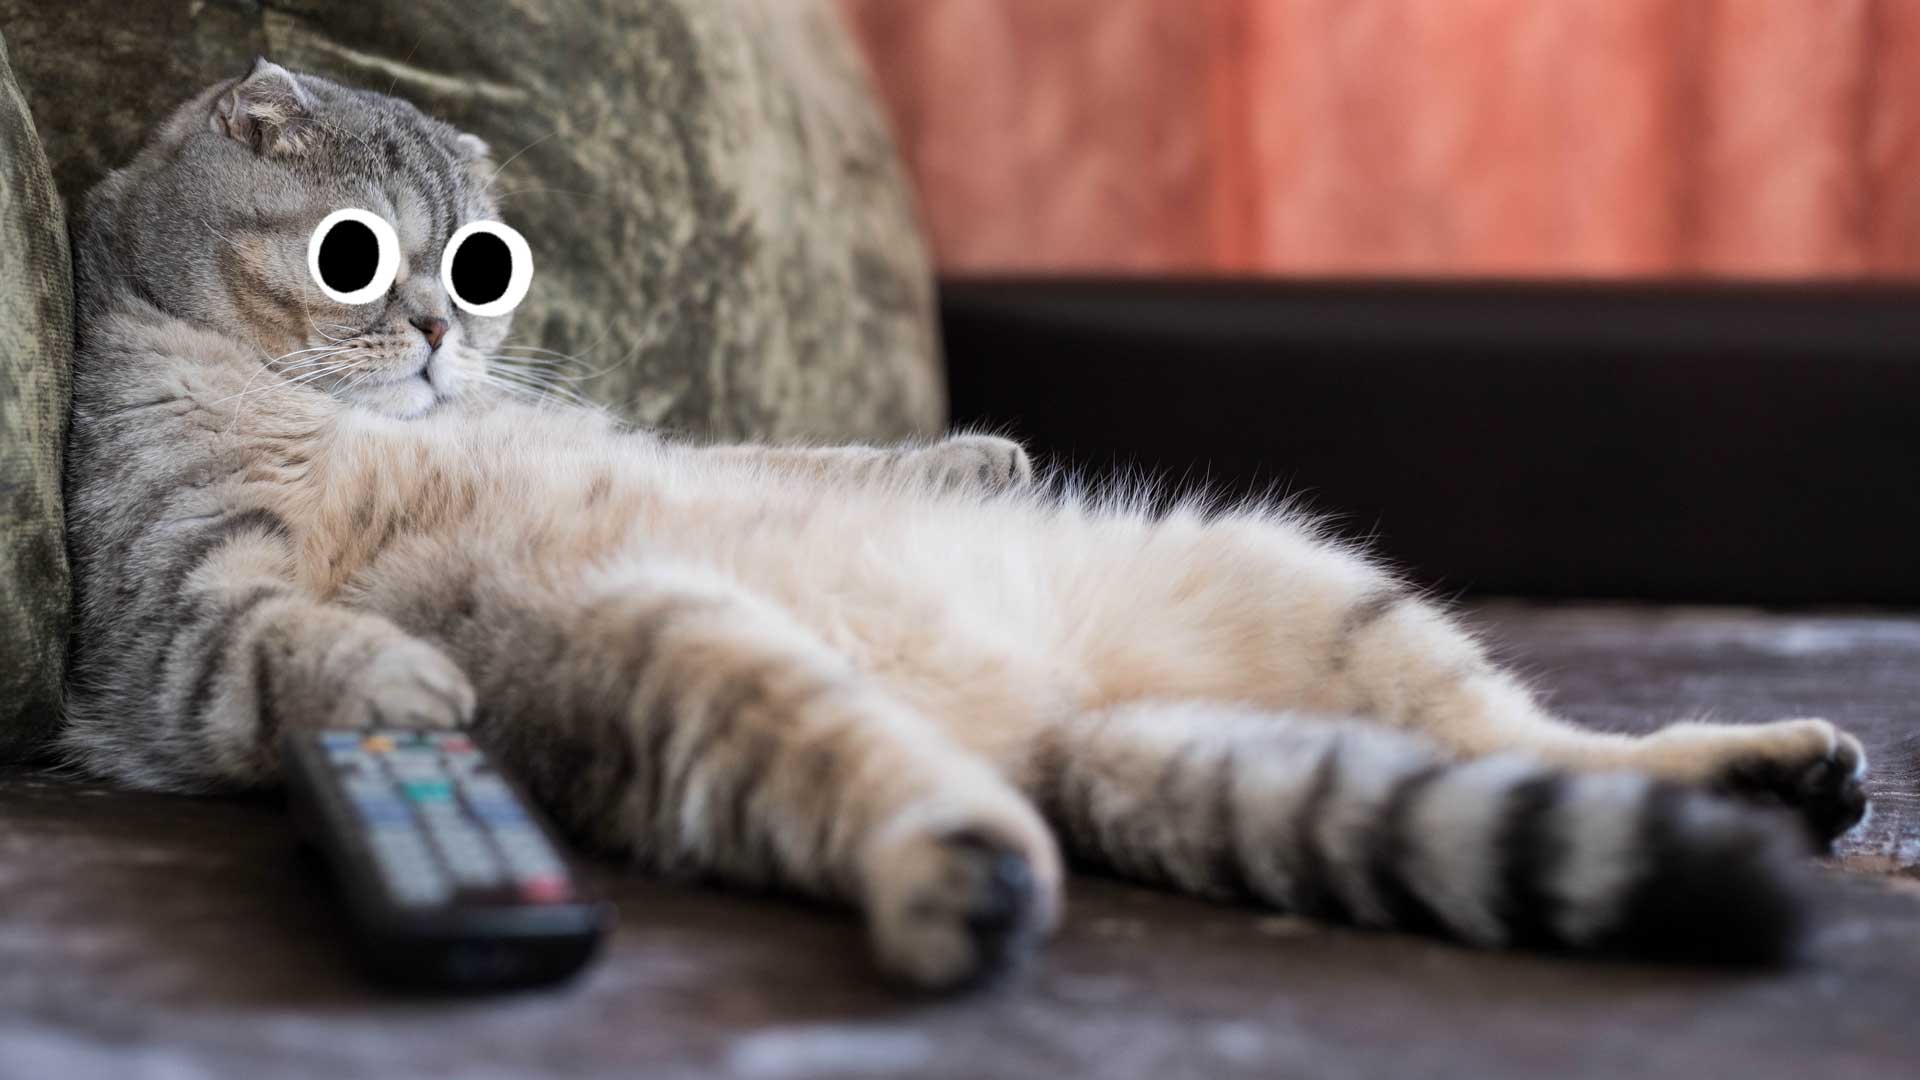 A cat watching TV